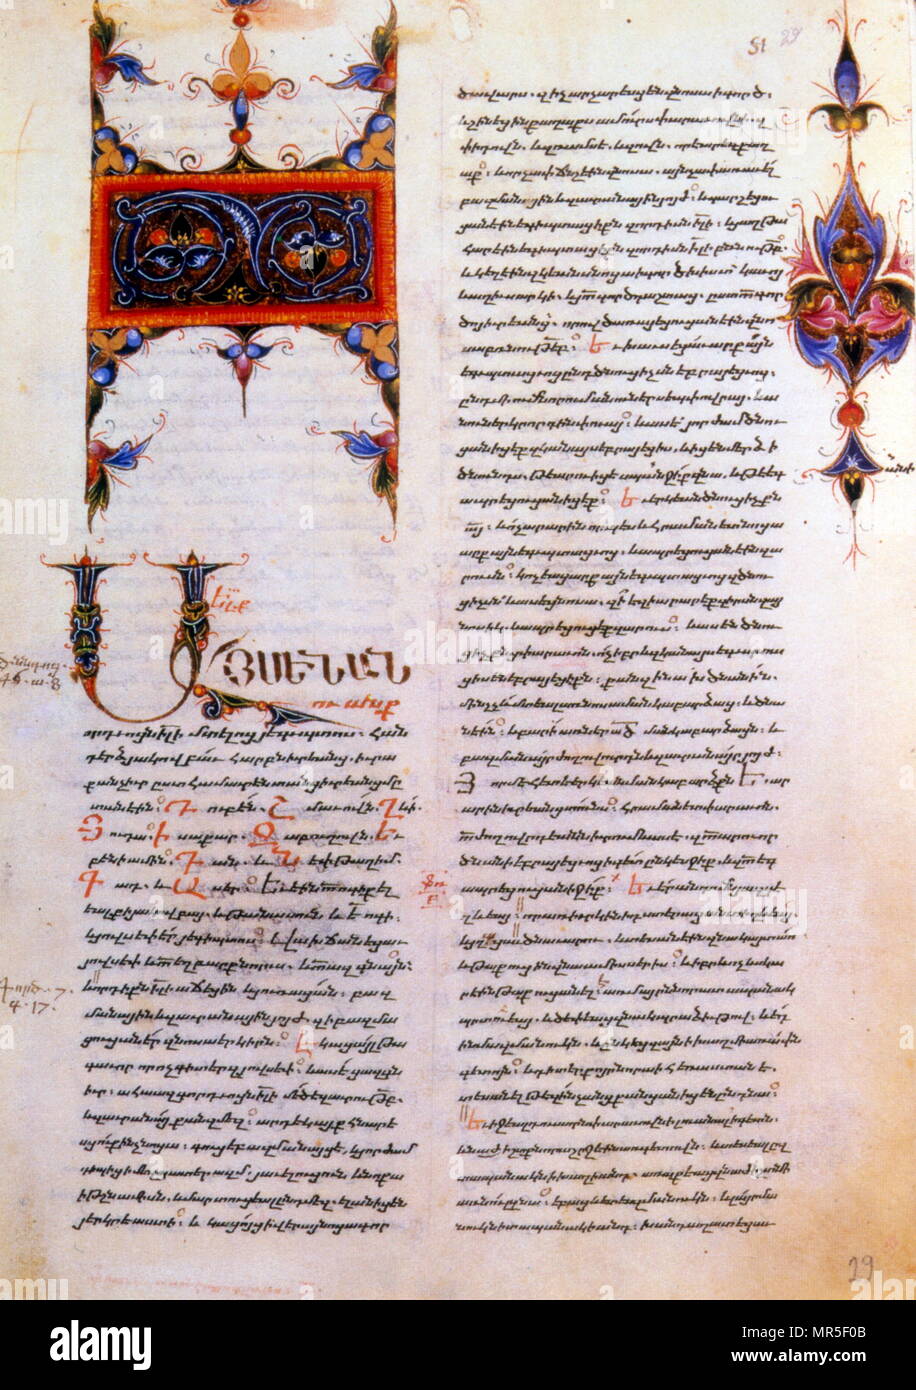 Cristiano armenio manuscrito ilustrado, siglo XIII Foto de stock